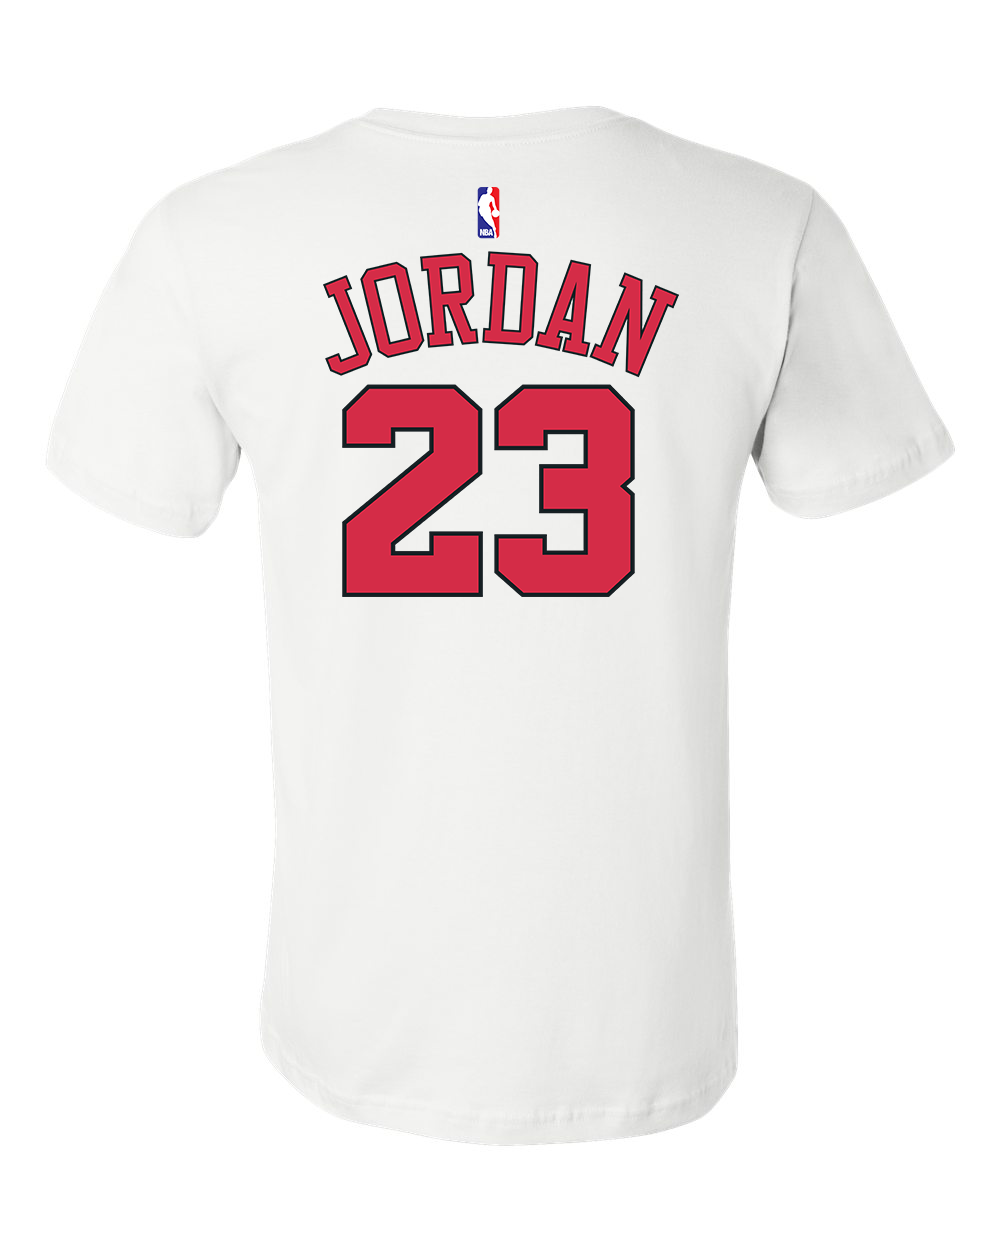 Chicago Bulls Jordan Jersey #23 Distressed As-is